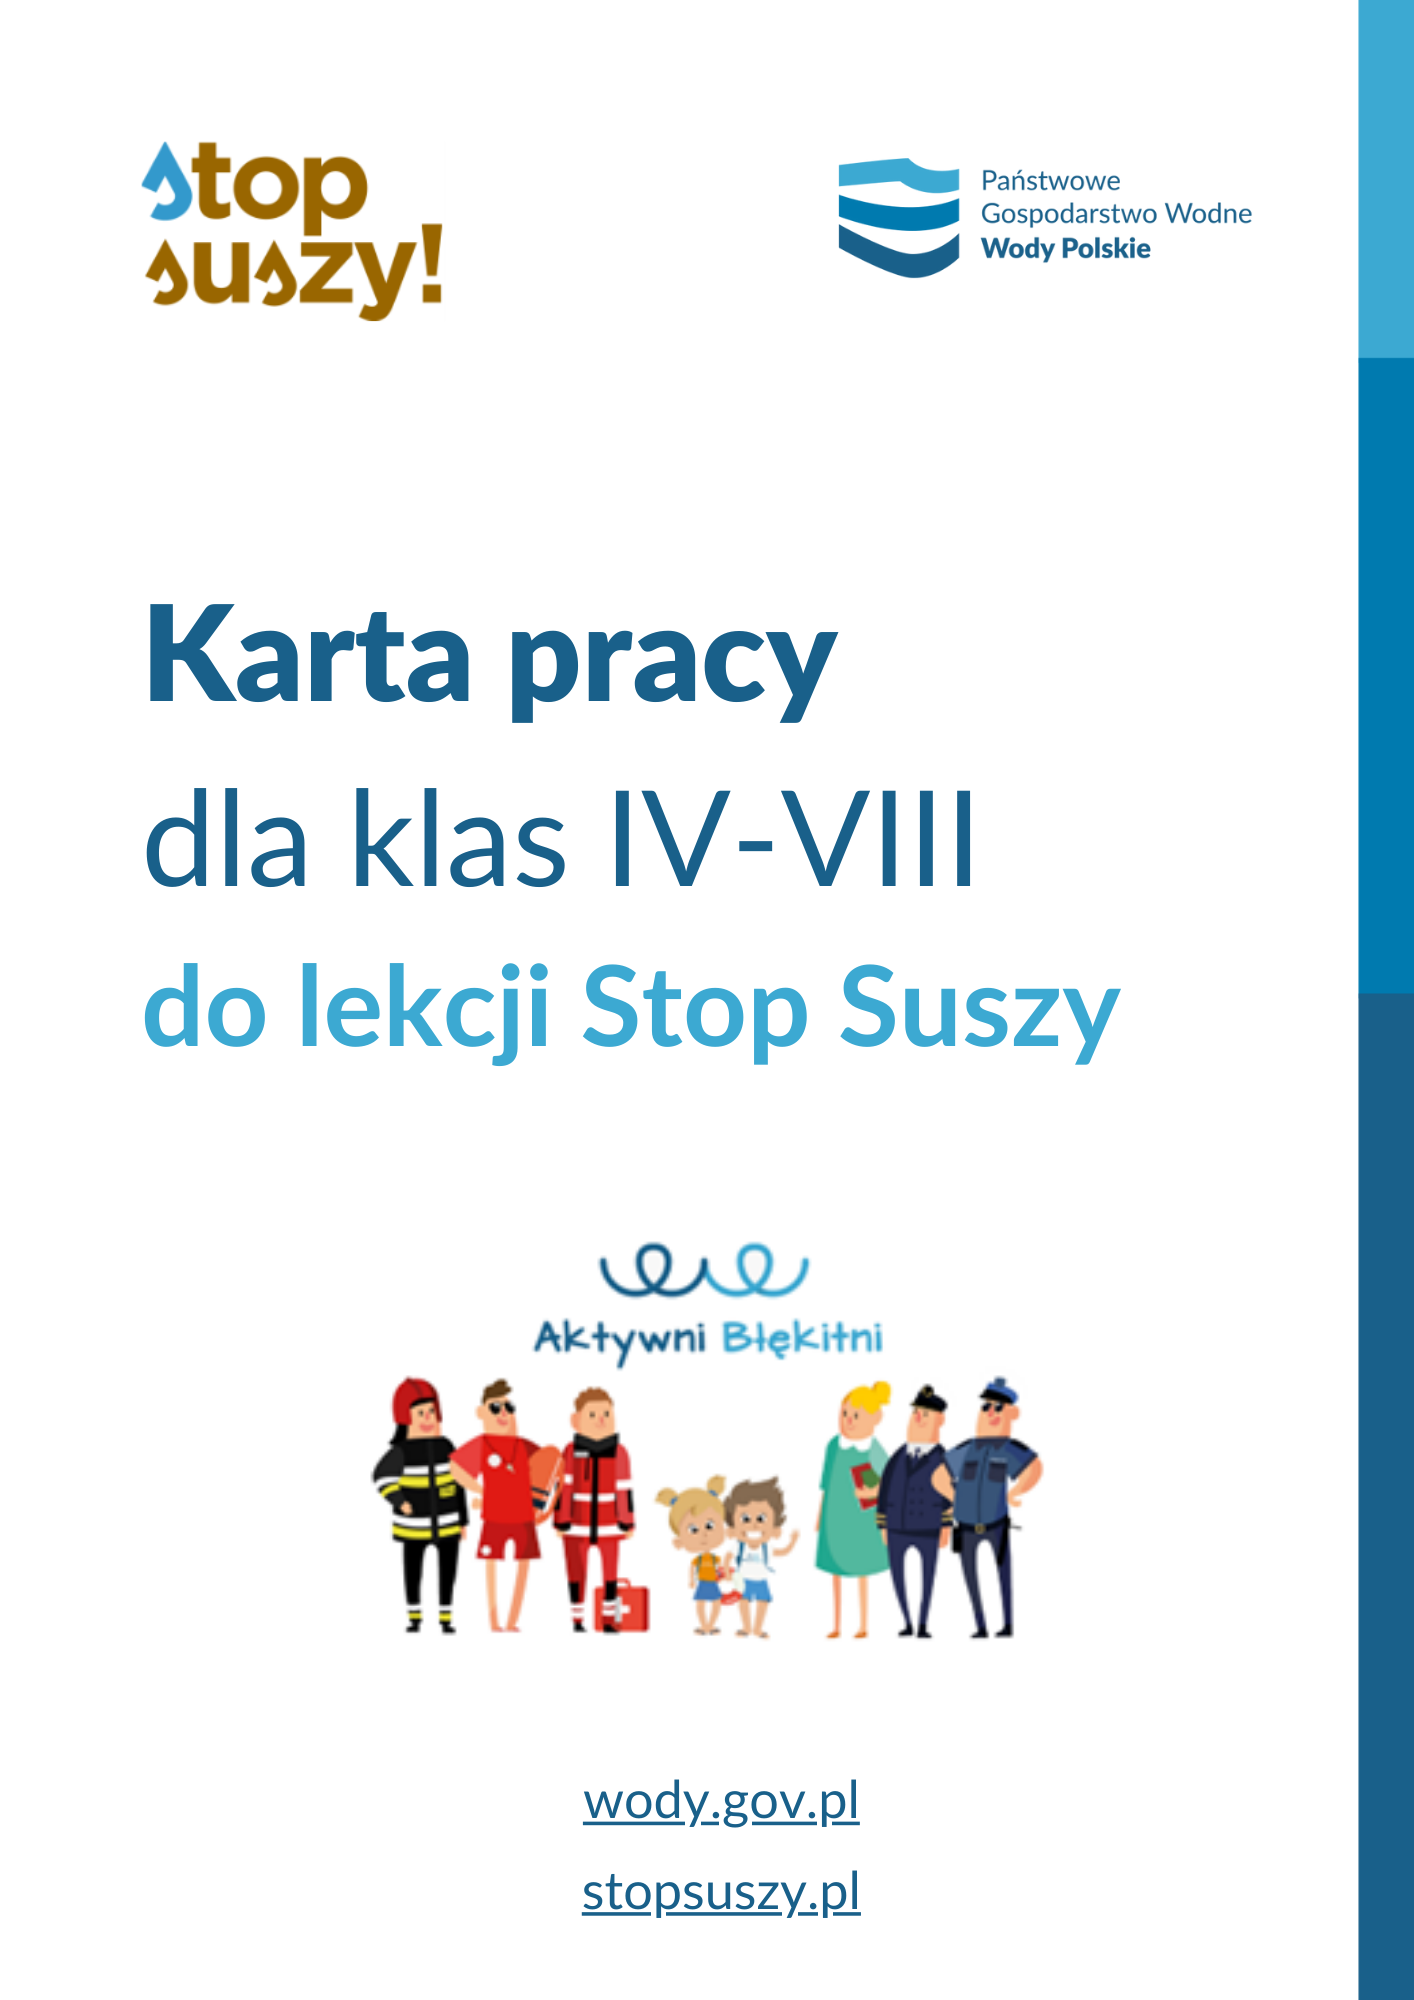 Stop Suszy - karta pracy dla klas IV-VIII